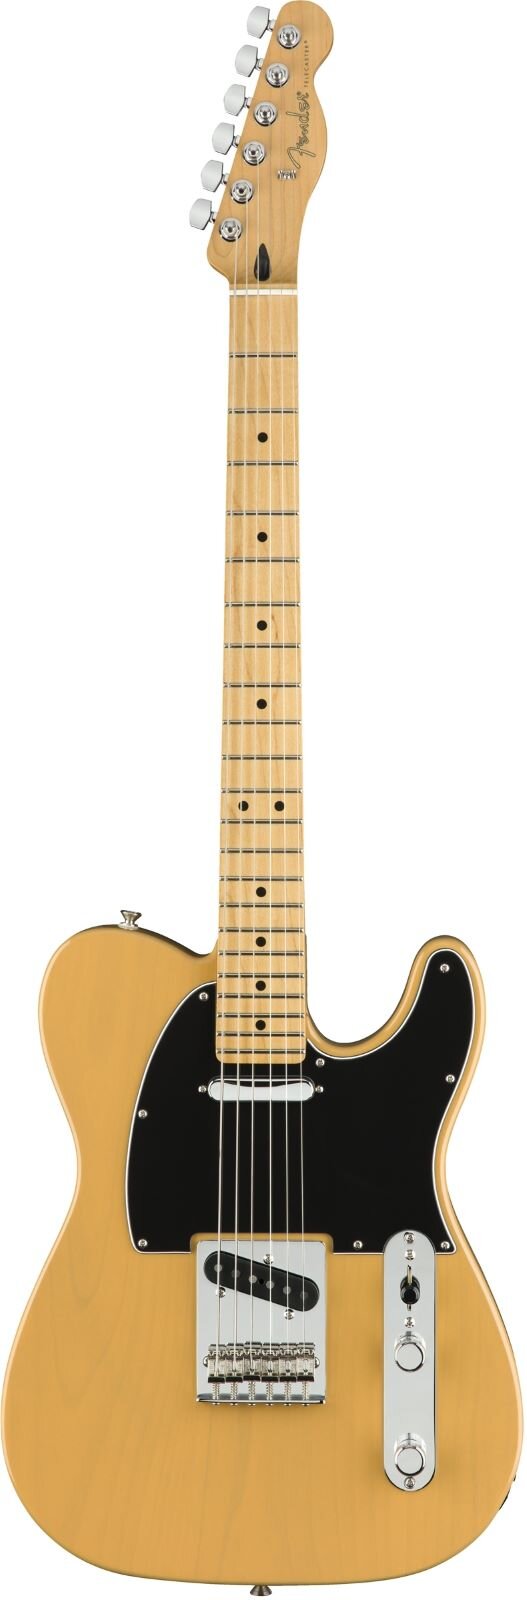 Fender Player Telecaster Maple Fingerboard Butterscotch Blonde : photo 1